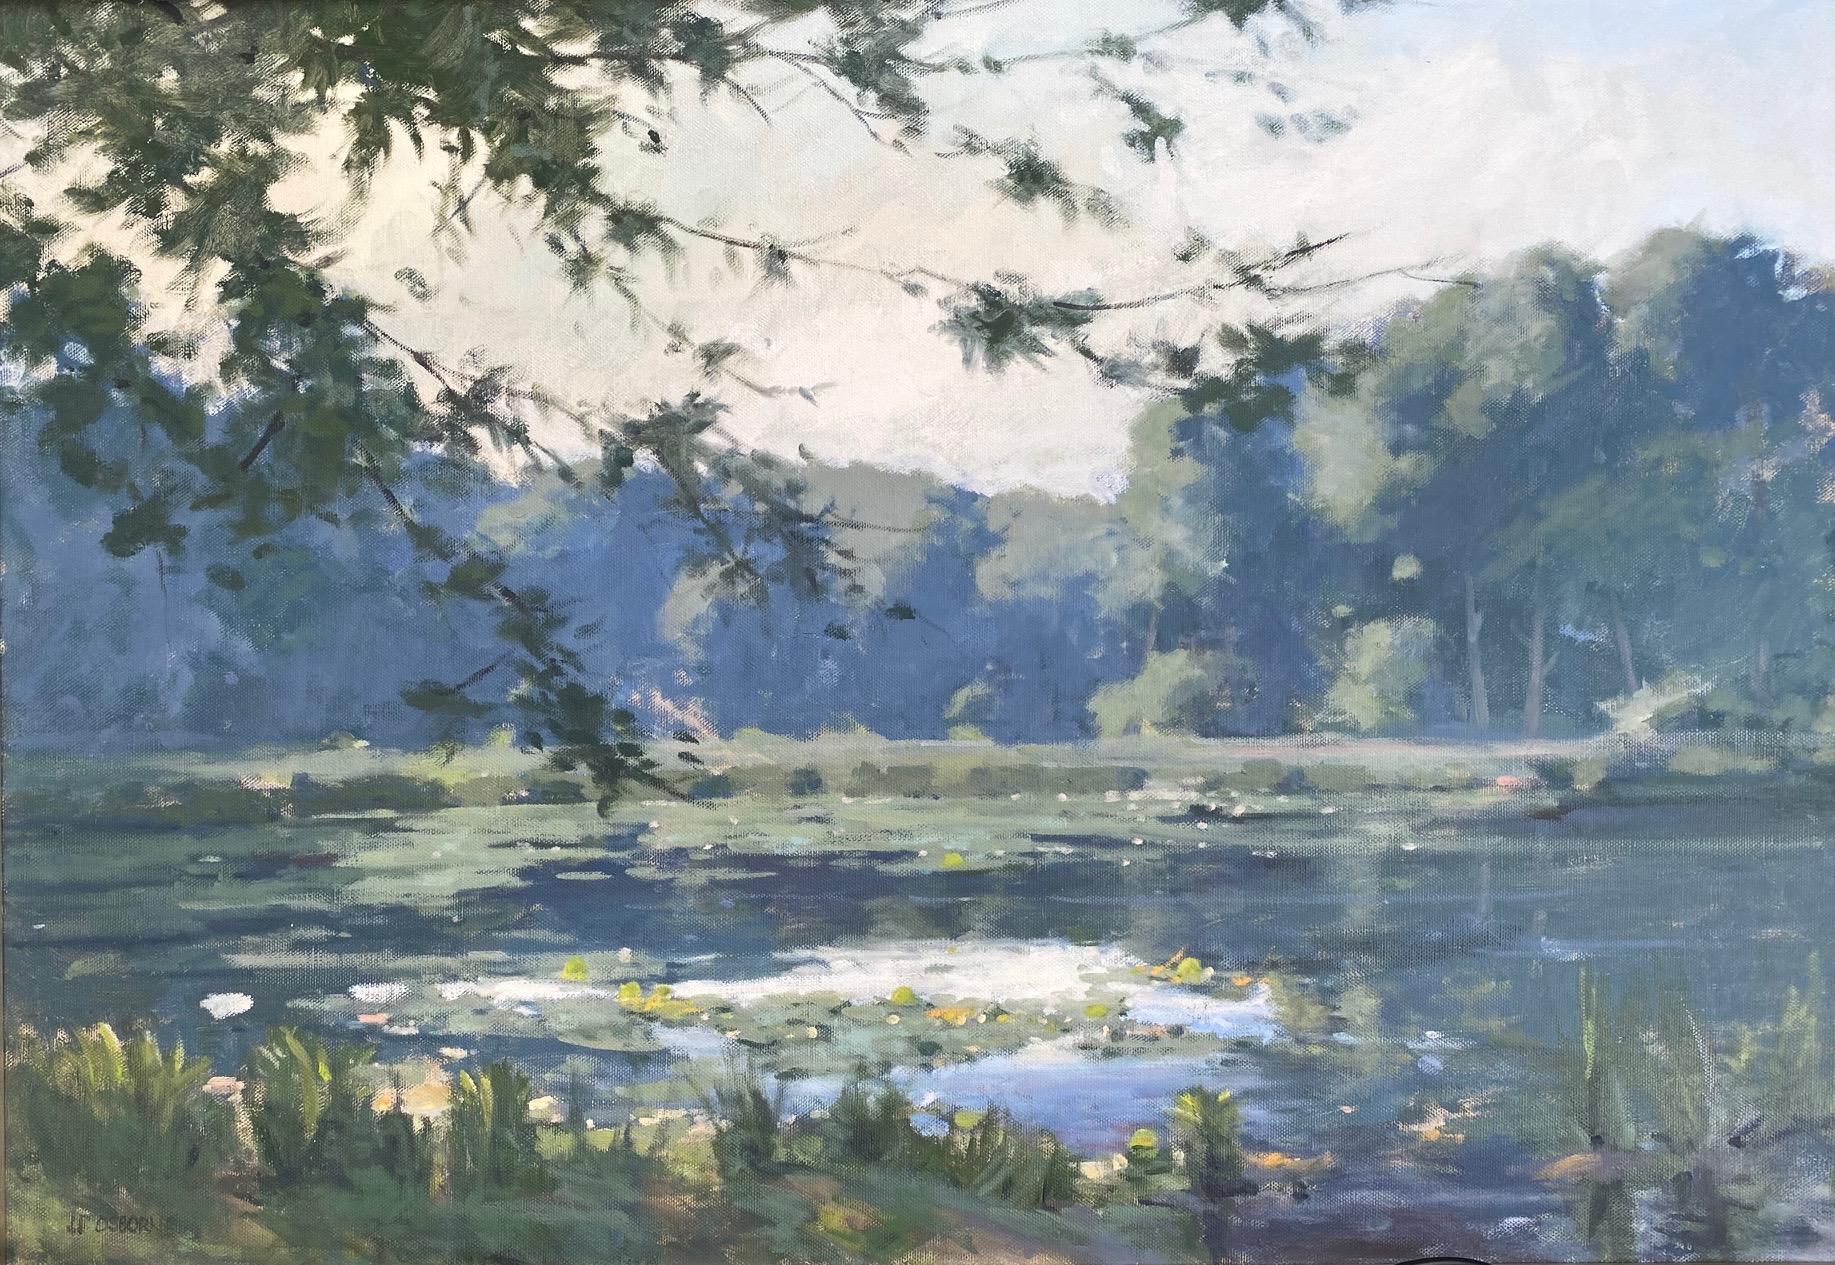 The Pond and Lilies, original 28x40 Hudson River School impressionist landscape - Painting by John Phillip Osborne